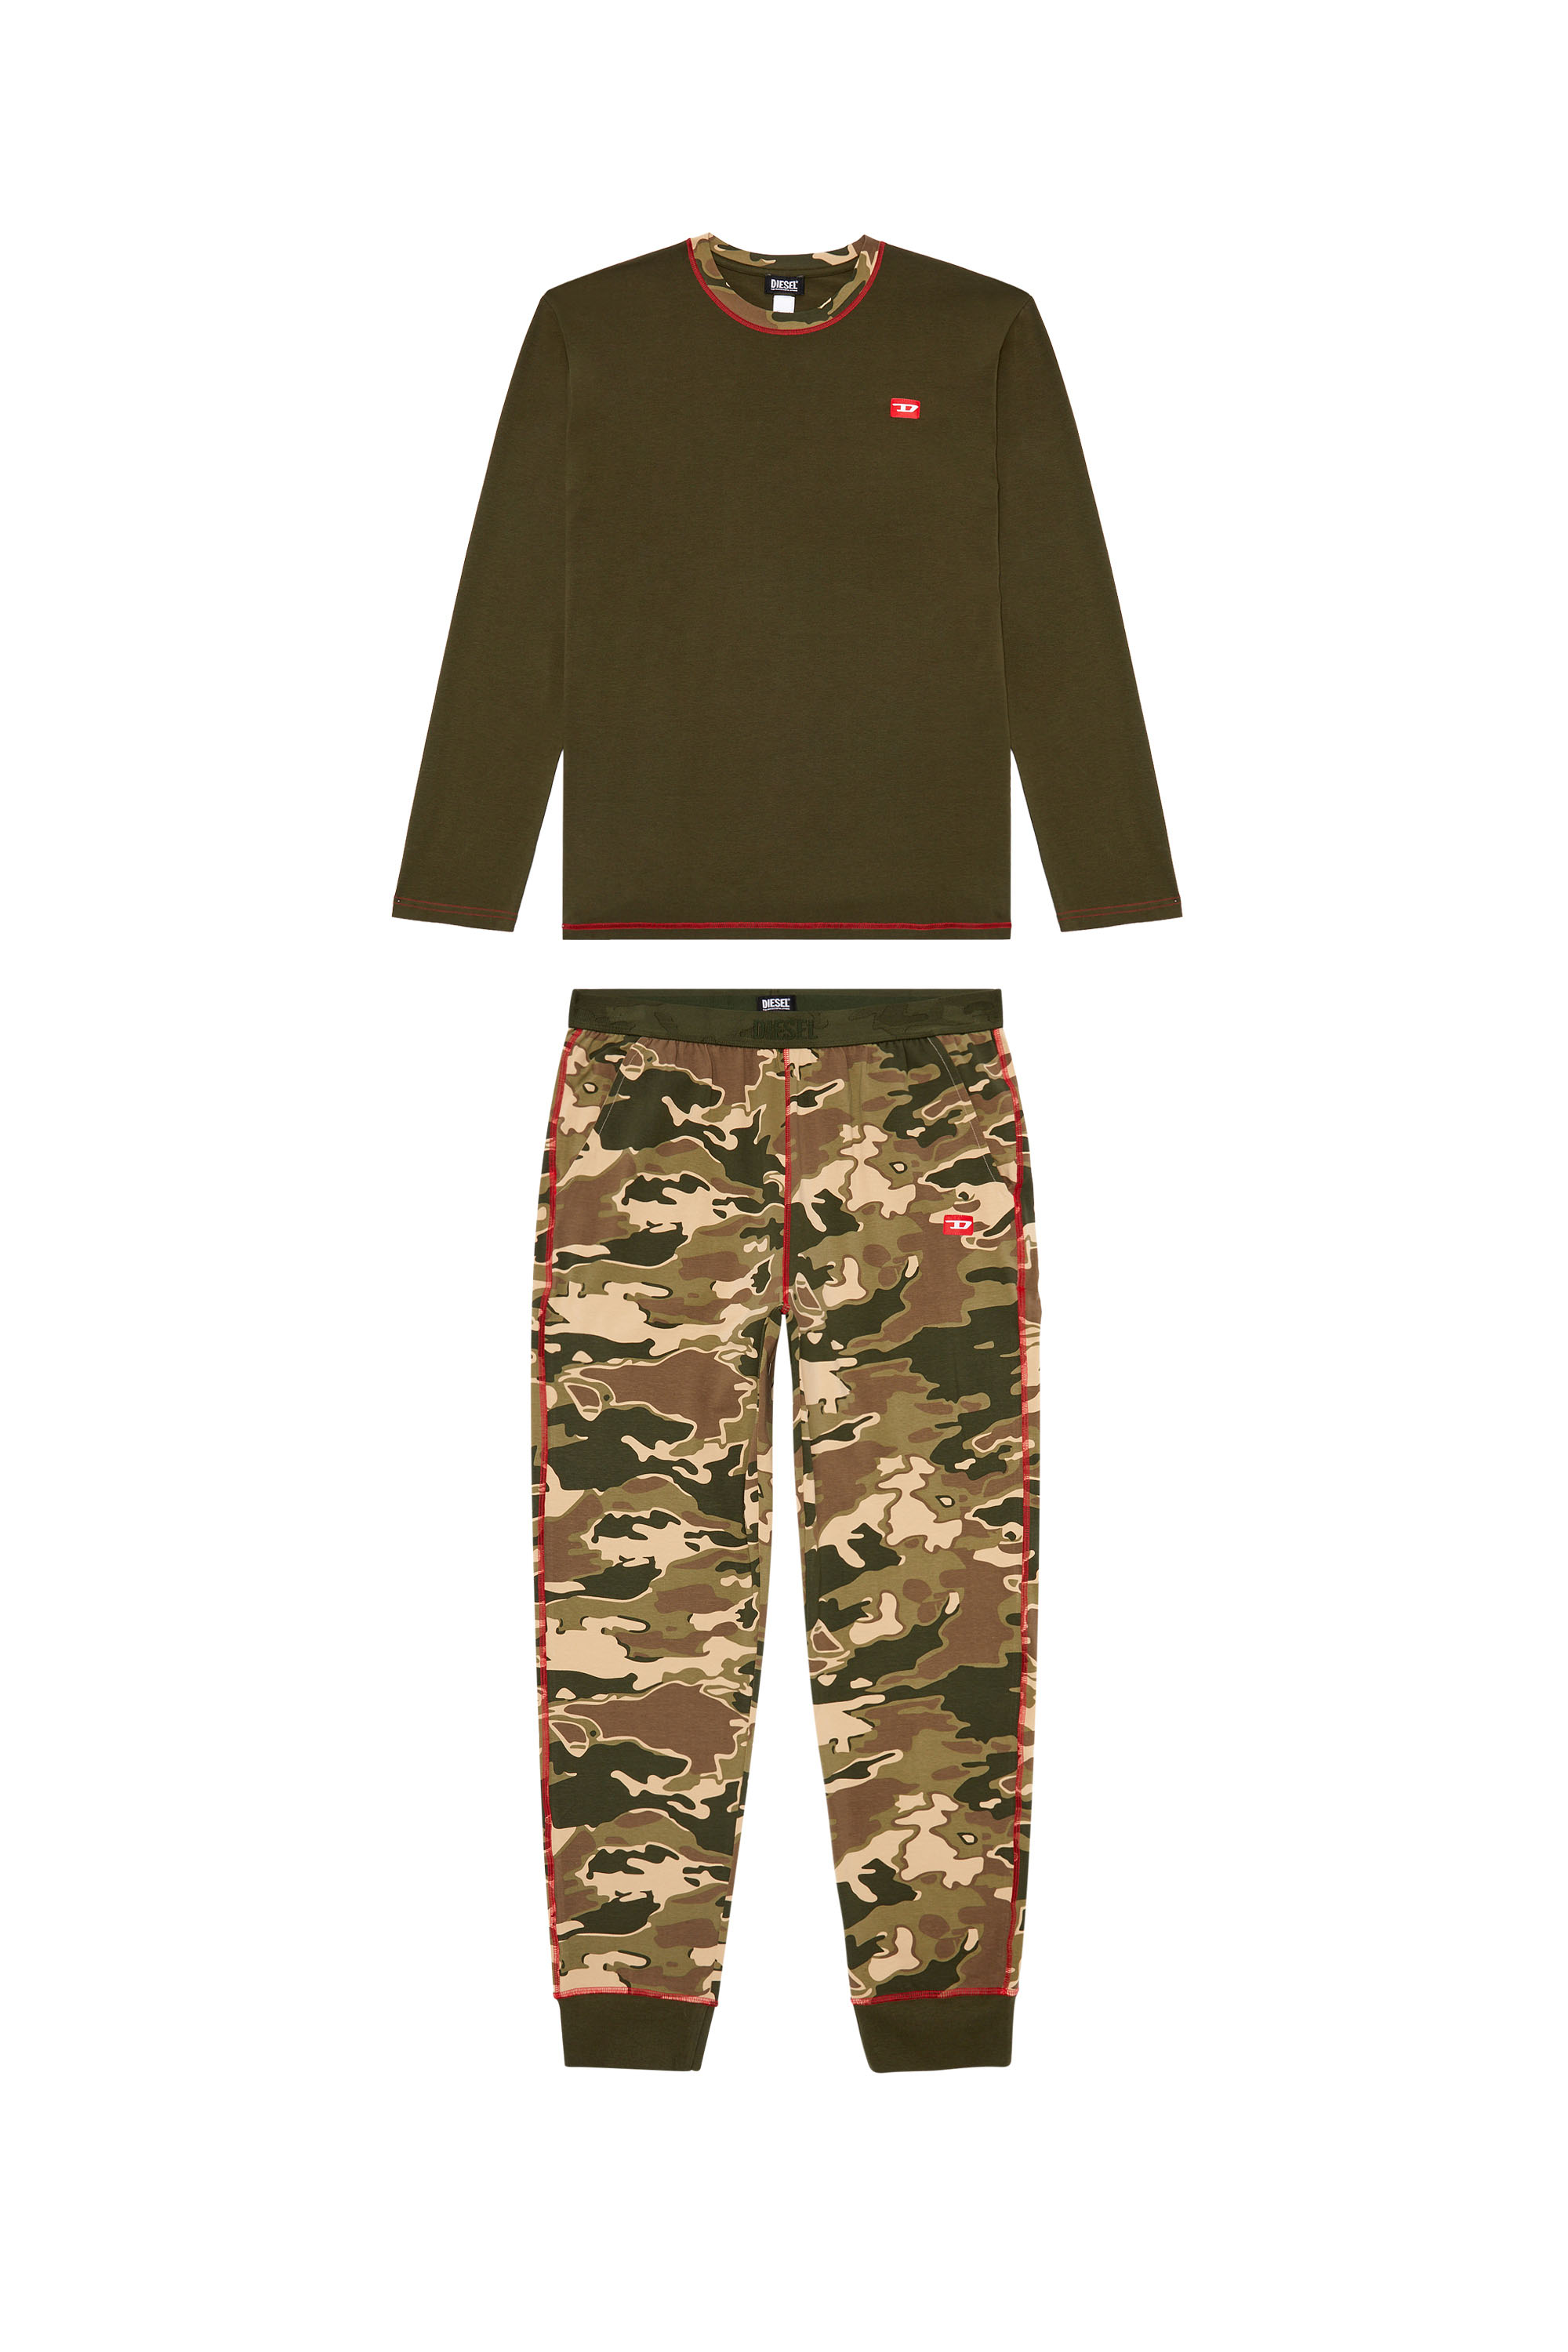 Diesel - Pyjamas aus Baumwolle mit Camouflage-Prints - Pyjamas - Herren - Bunt